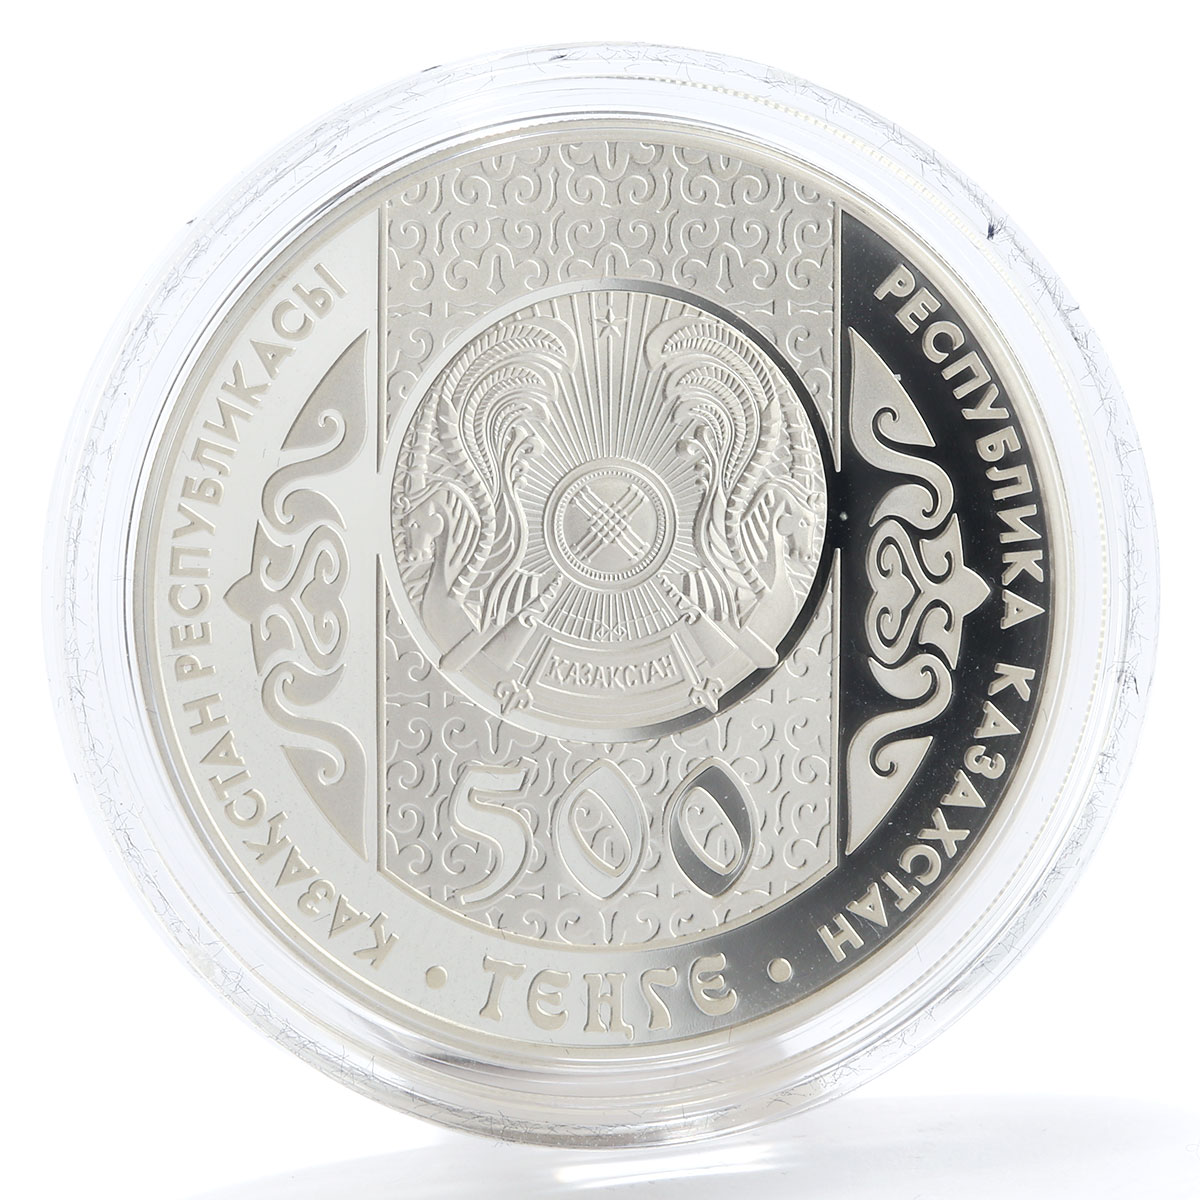 Kazakhstan 500 Tenge Kyz Kuu horsemen proof silver coin 2008